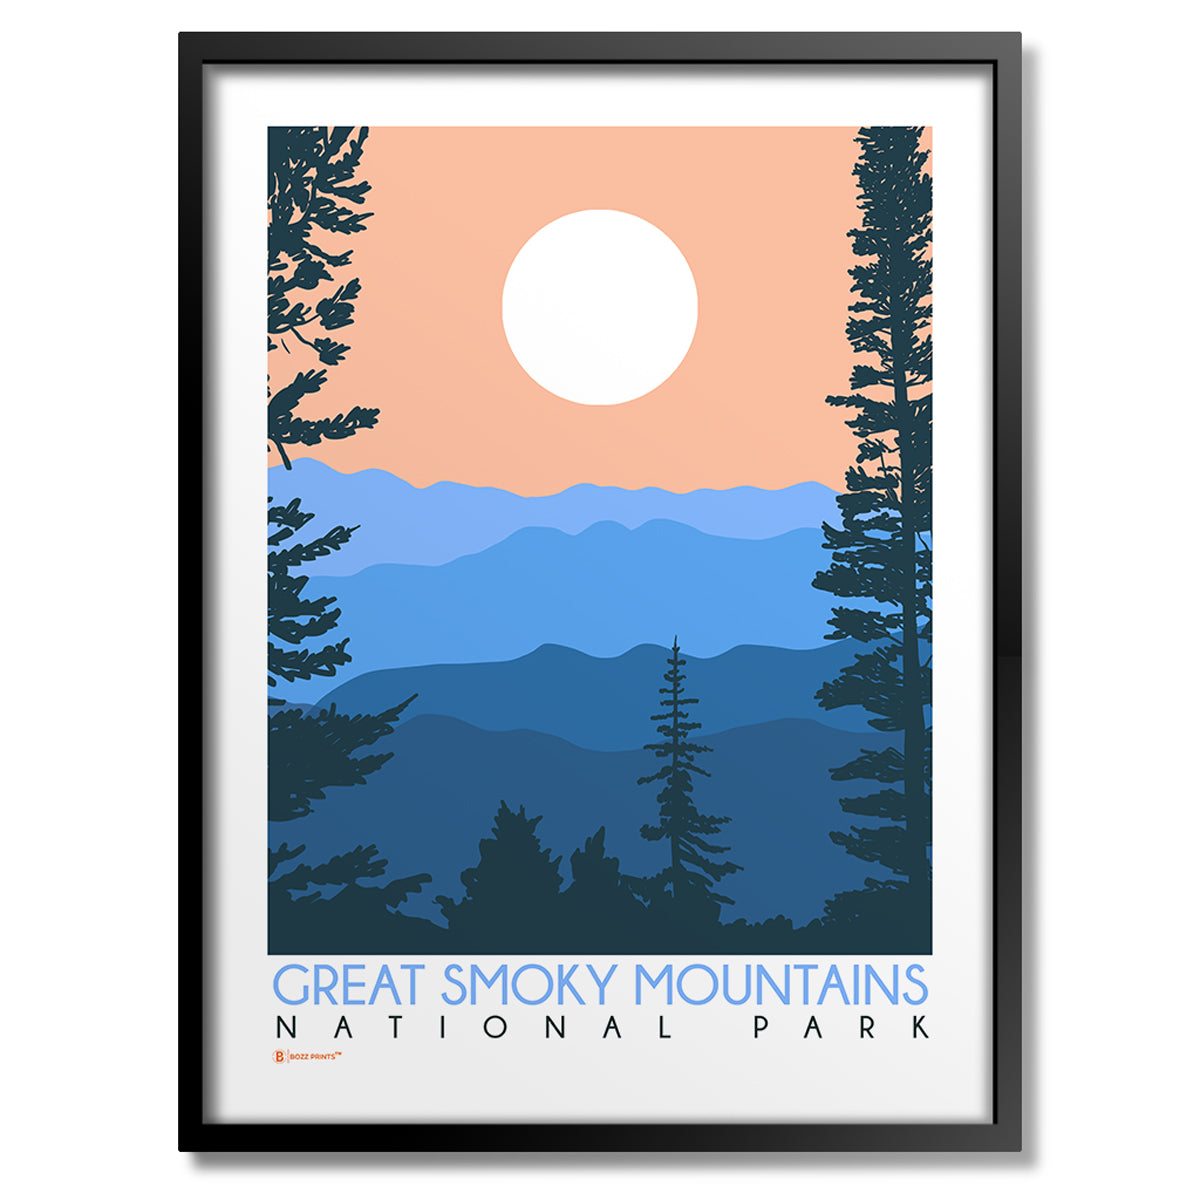 Great Smoky Mountains National Park Newfound Gap Print - Bozz Prints